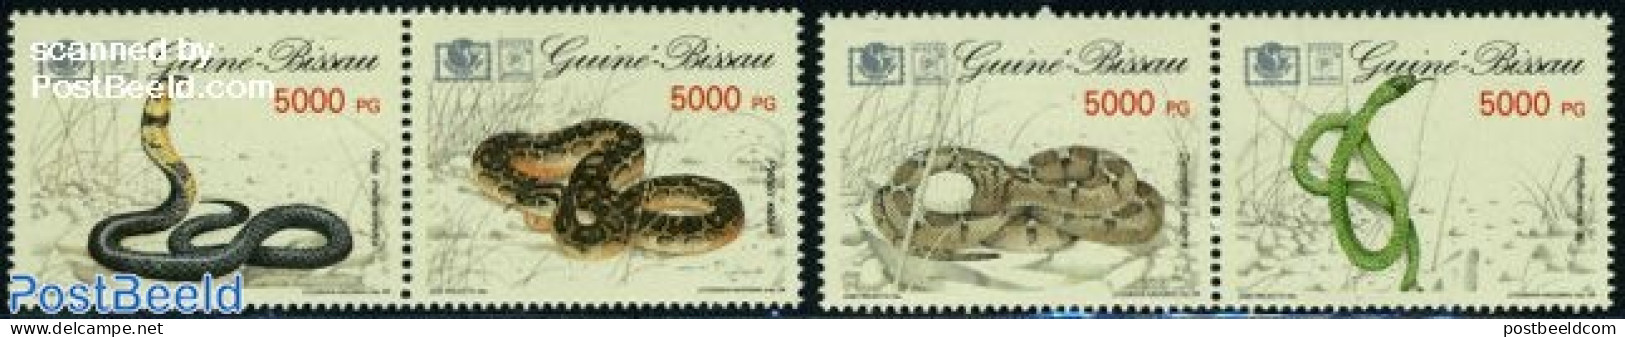 Guinea Bissau 1994 Philakorea, Singpex 4v (2x[:]), Mint NH, Nature - Reptiles - Snakes - Guinea-Bissau